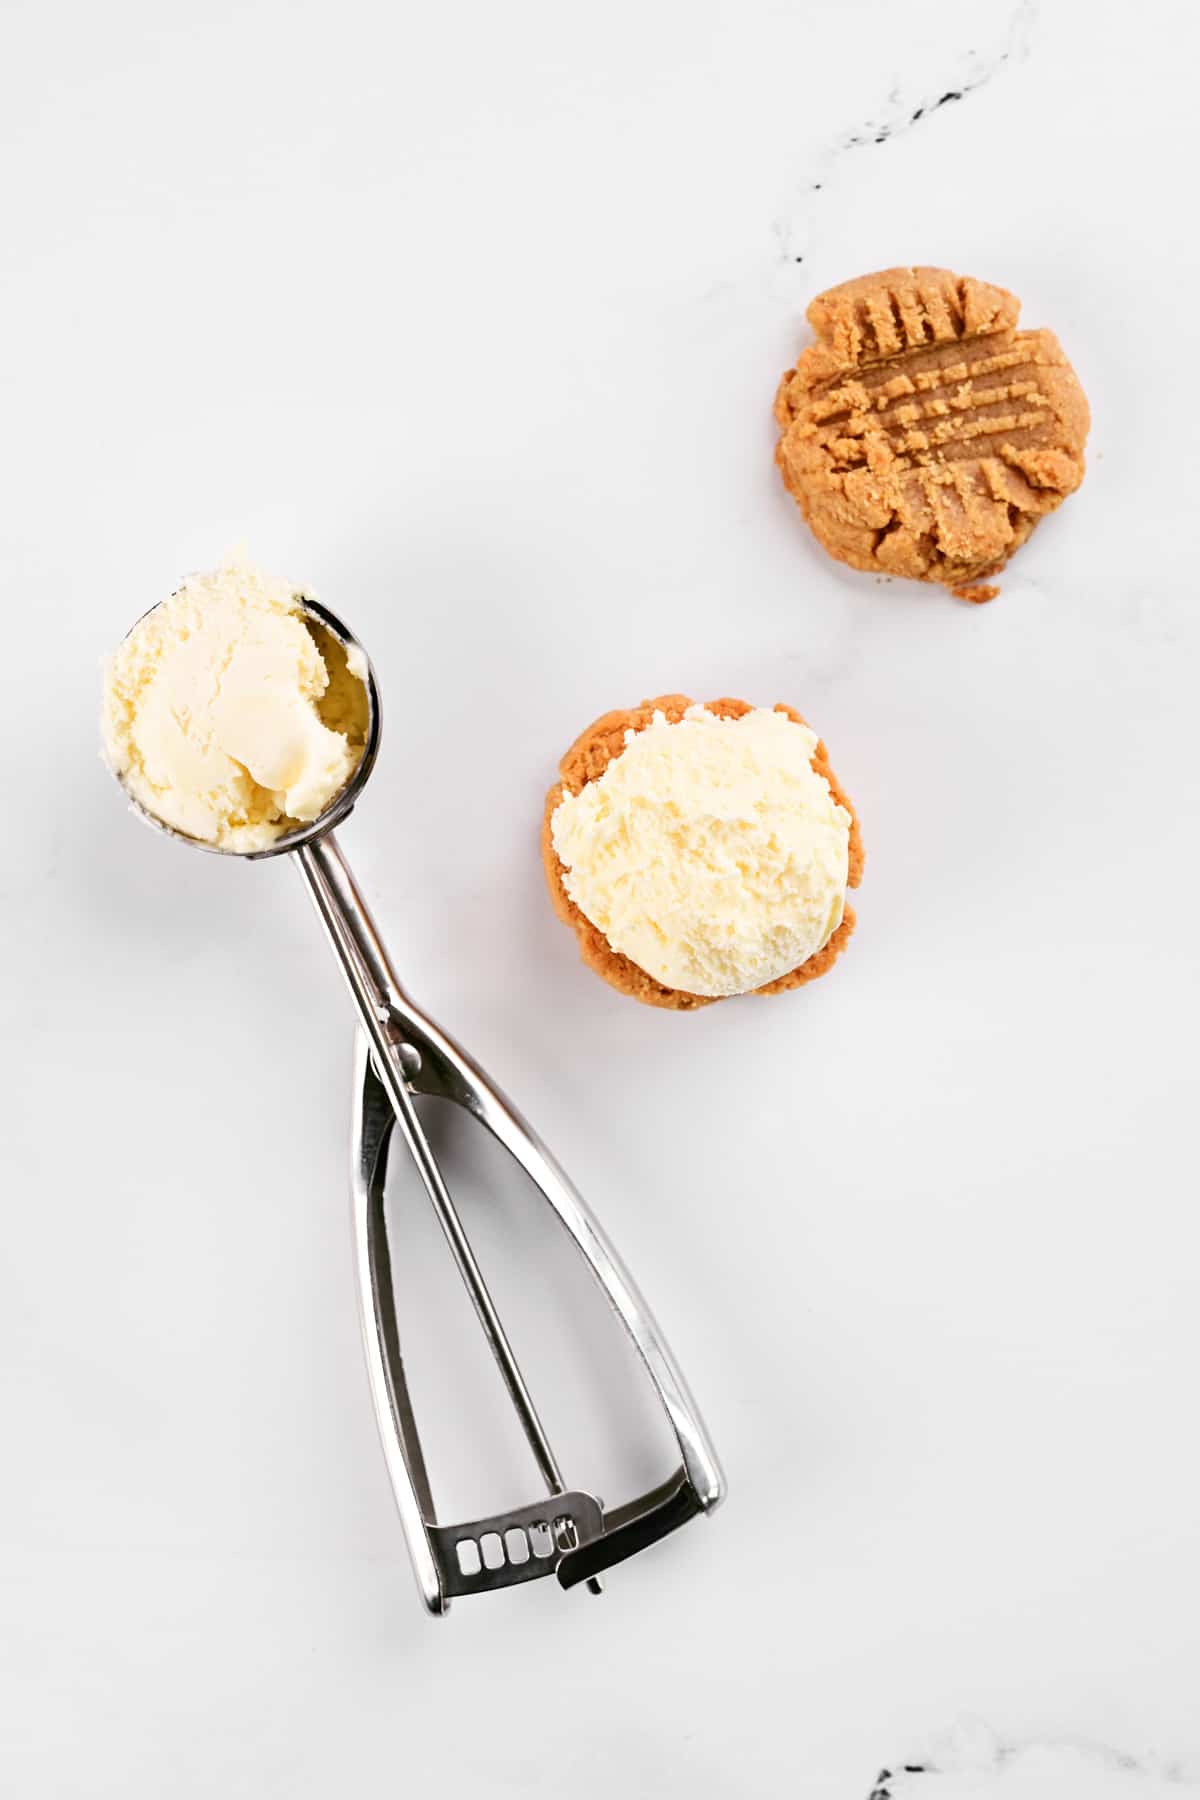 A scoop of ice cream in an ice cream scoop next to cookies and another scoop of vanilla ice cream.